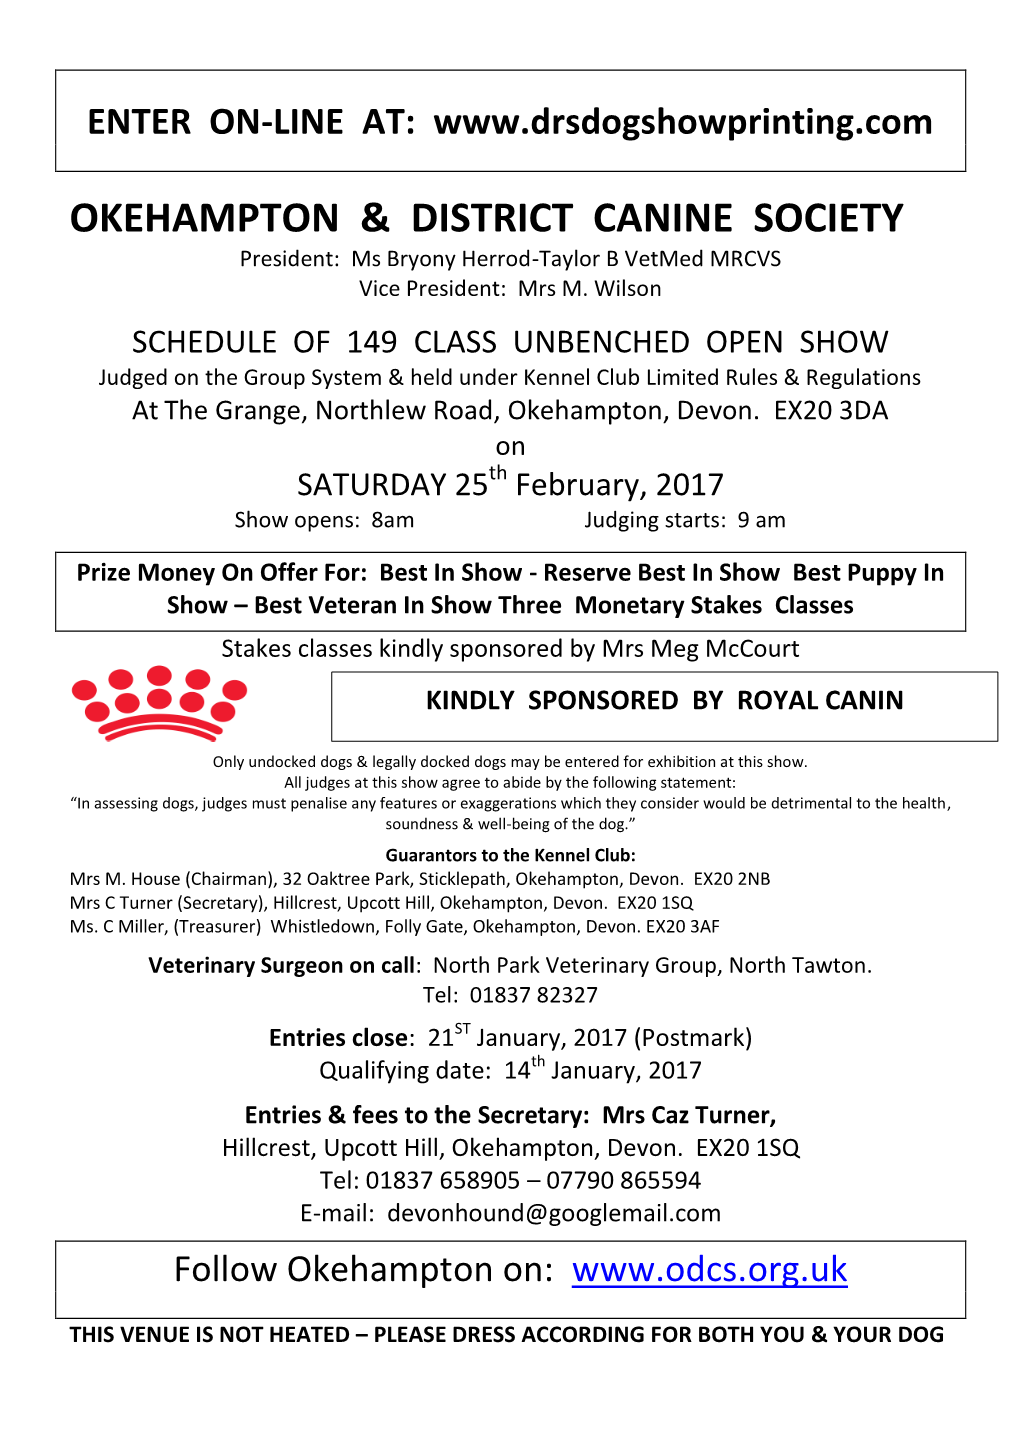 Okehampton & District Canine Society